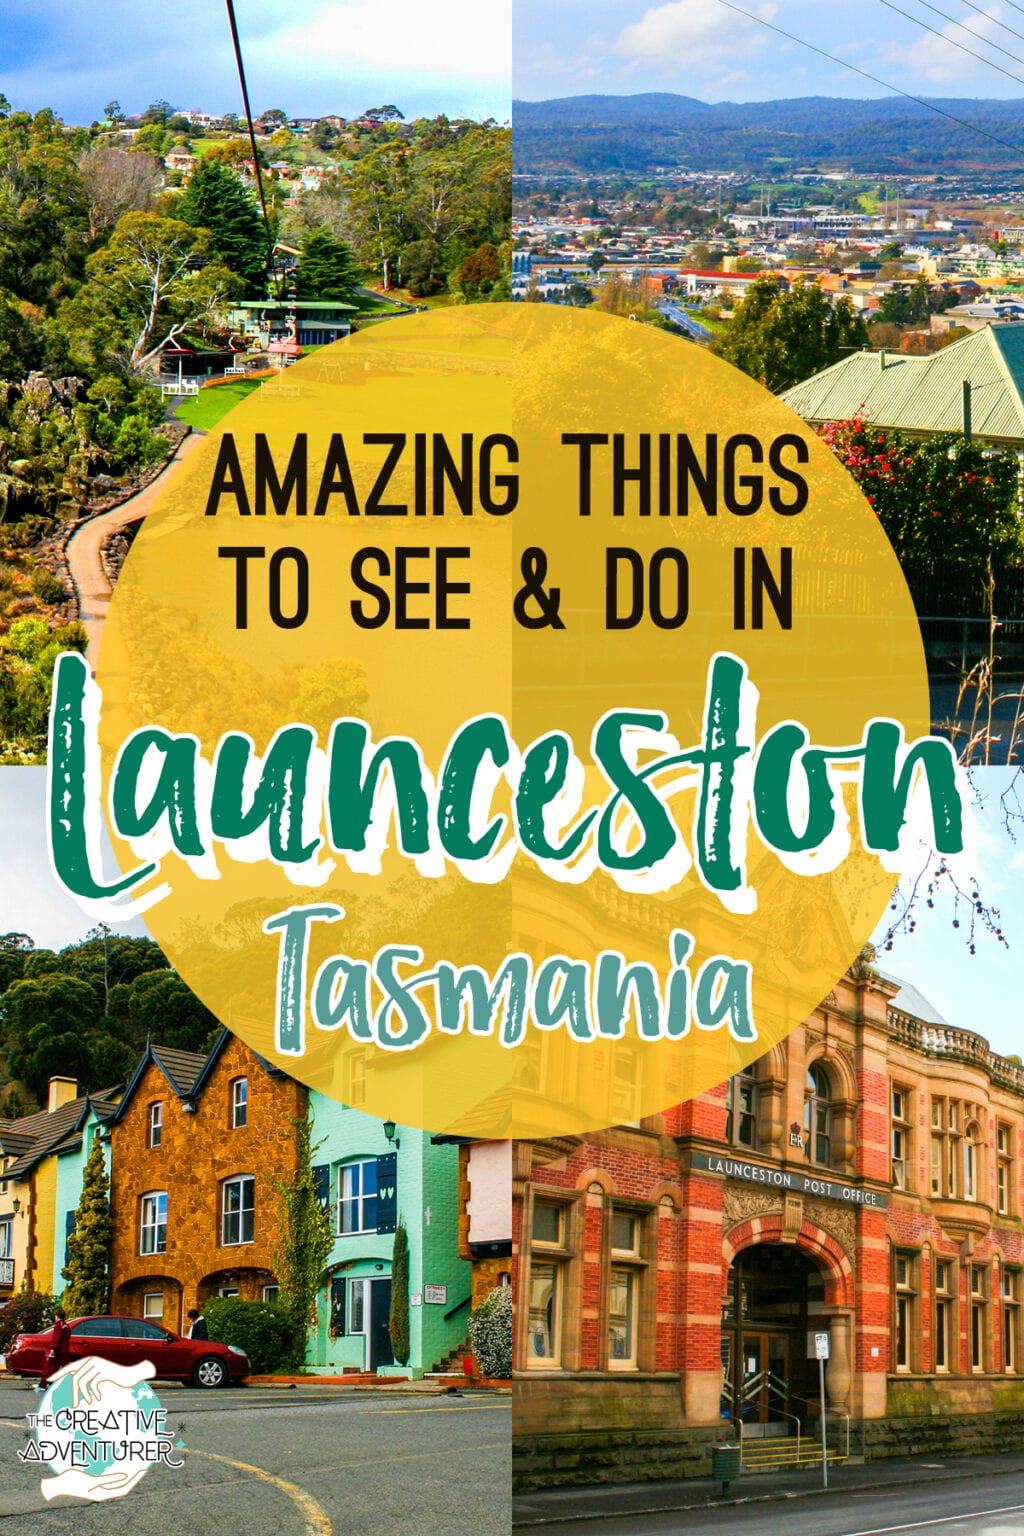 book a tour in launceston